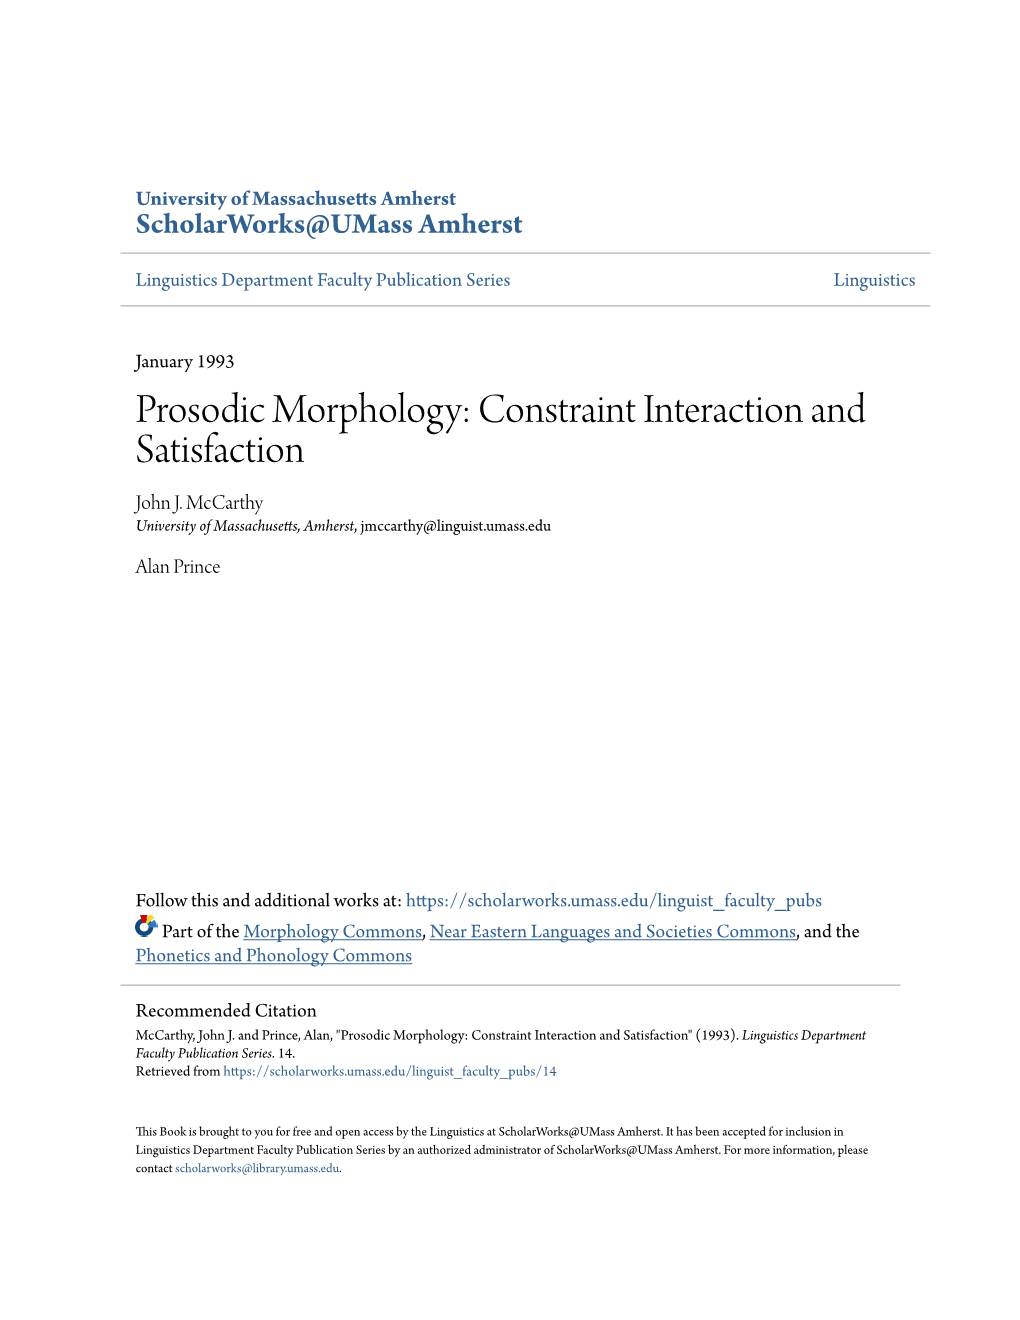 Prosodic Morphology: Constraint Interaction and Satisfaction John J